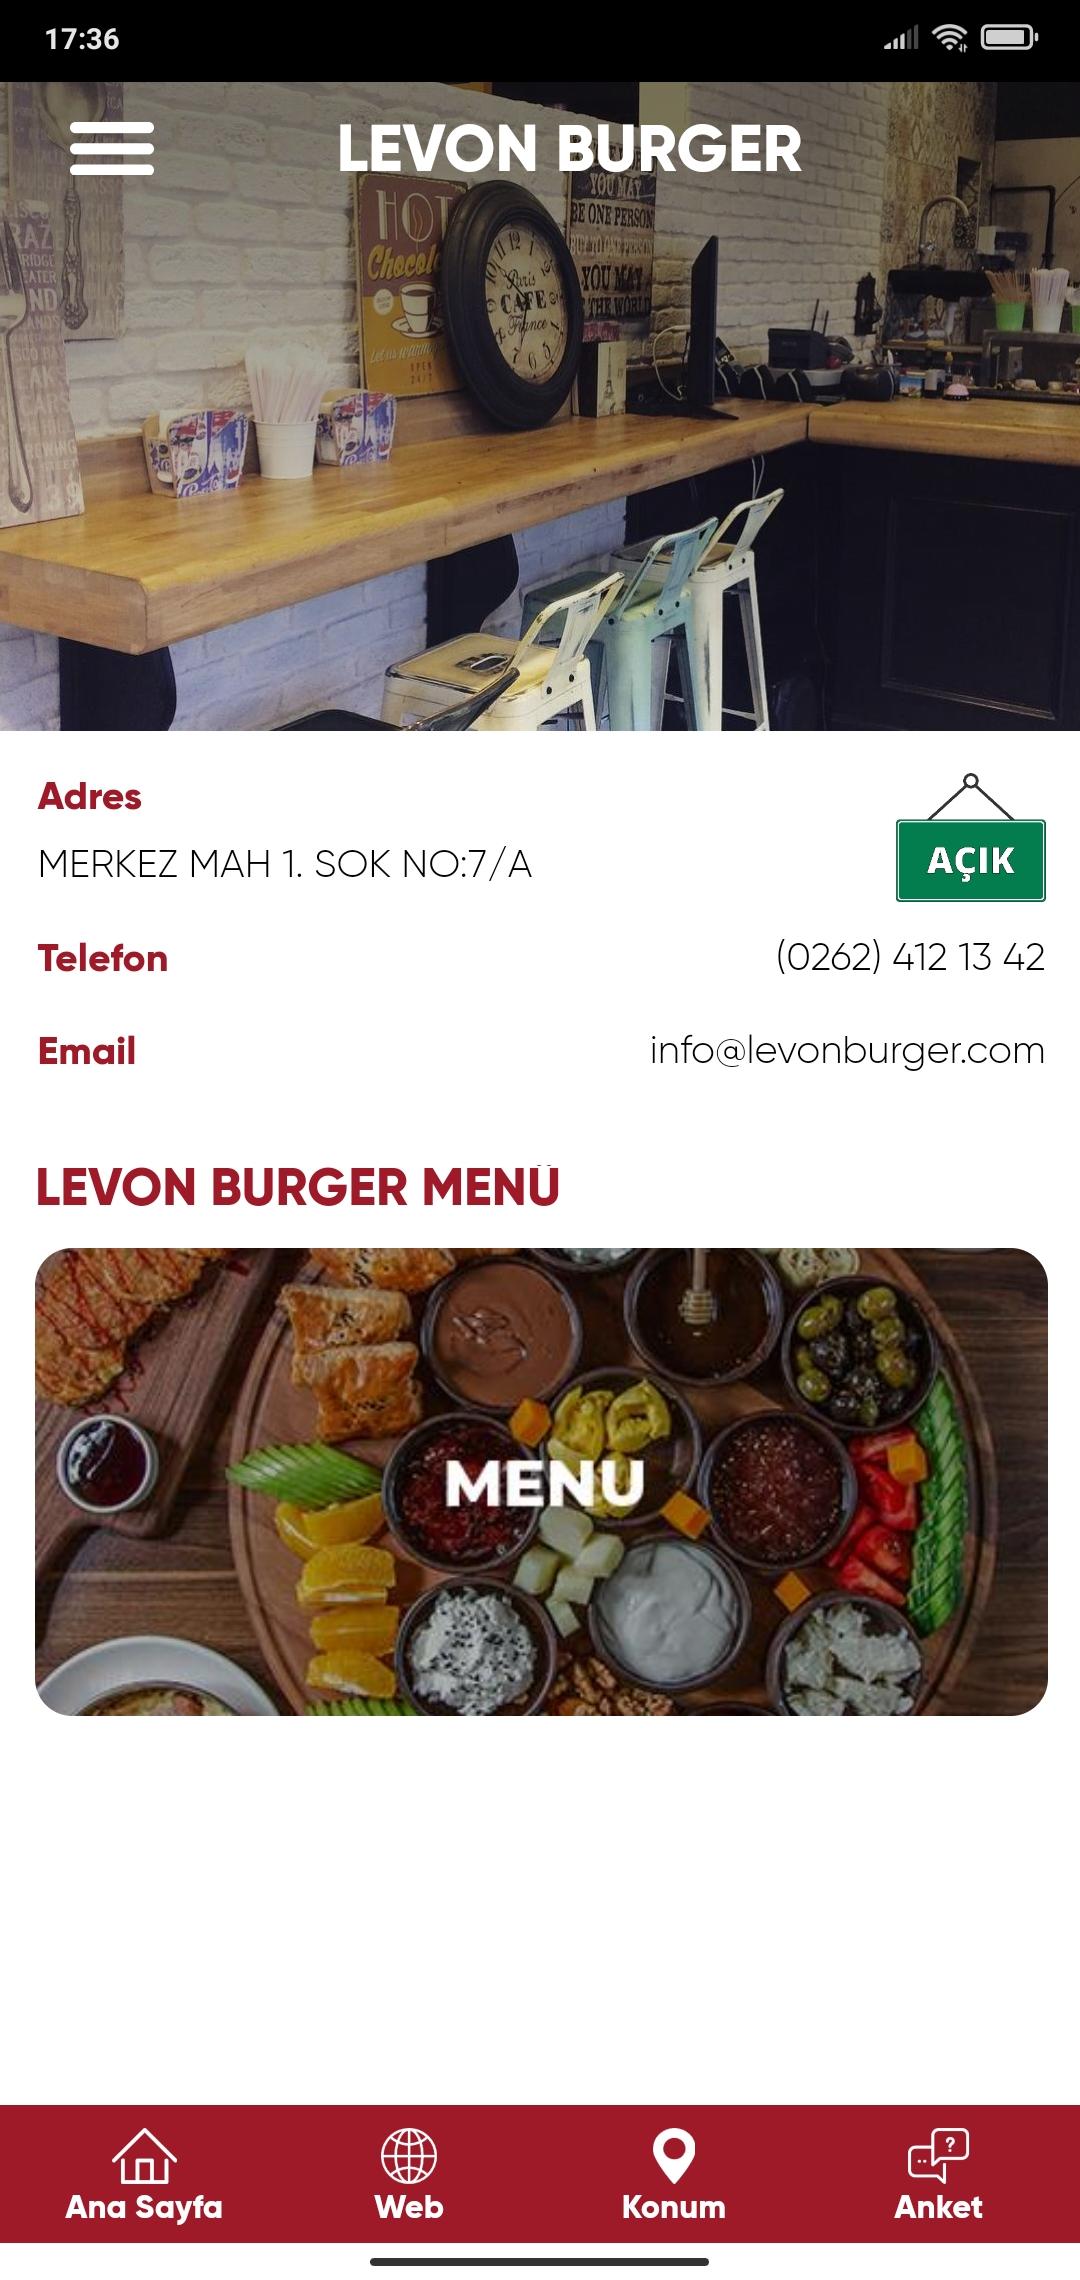 Levon Burger 5.0.0 Screenshot 2